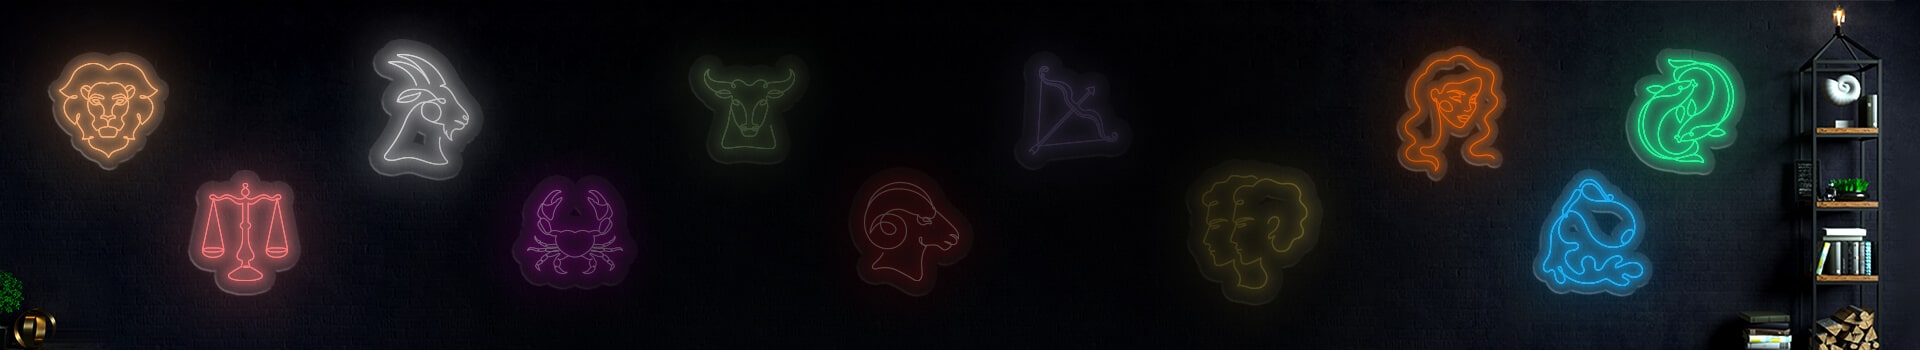 Zodiac Neon Signs!